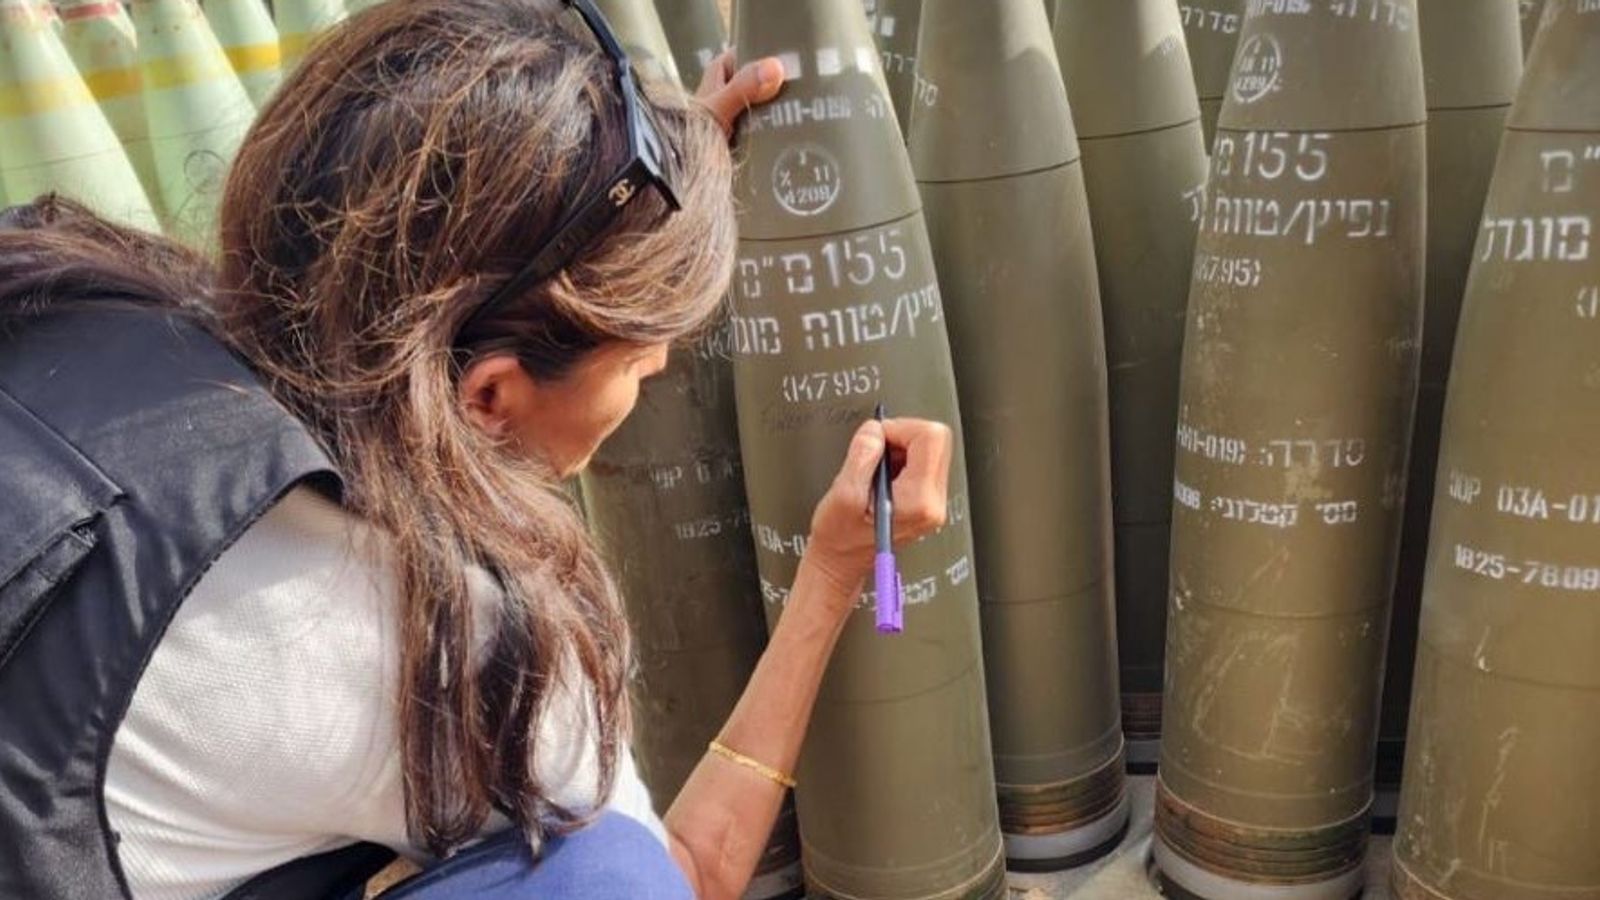 Nikki Haley writes 'finish them' on IDF shell during Israel visit